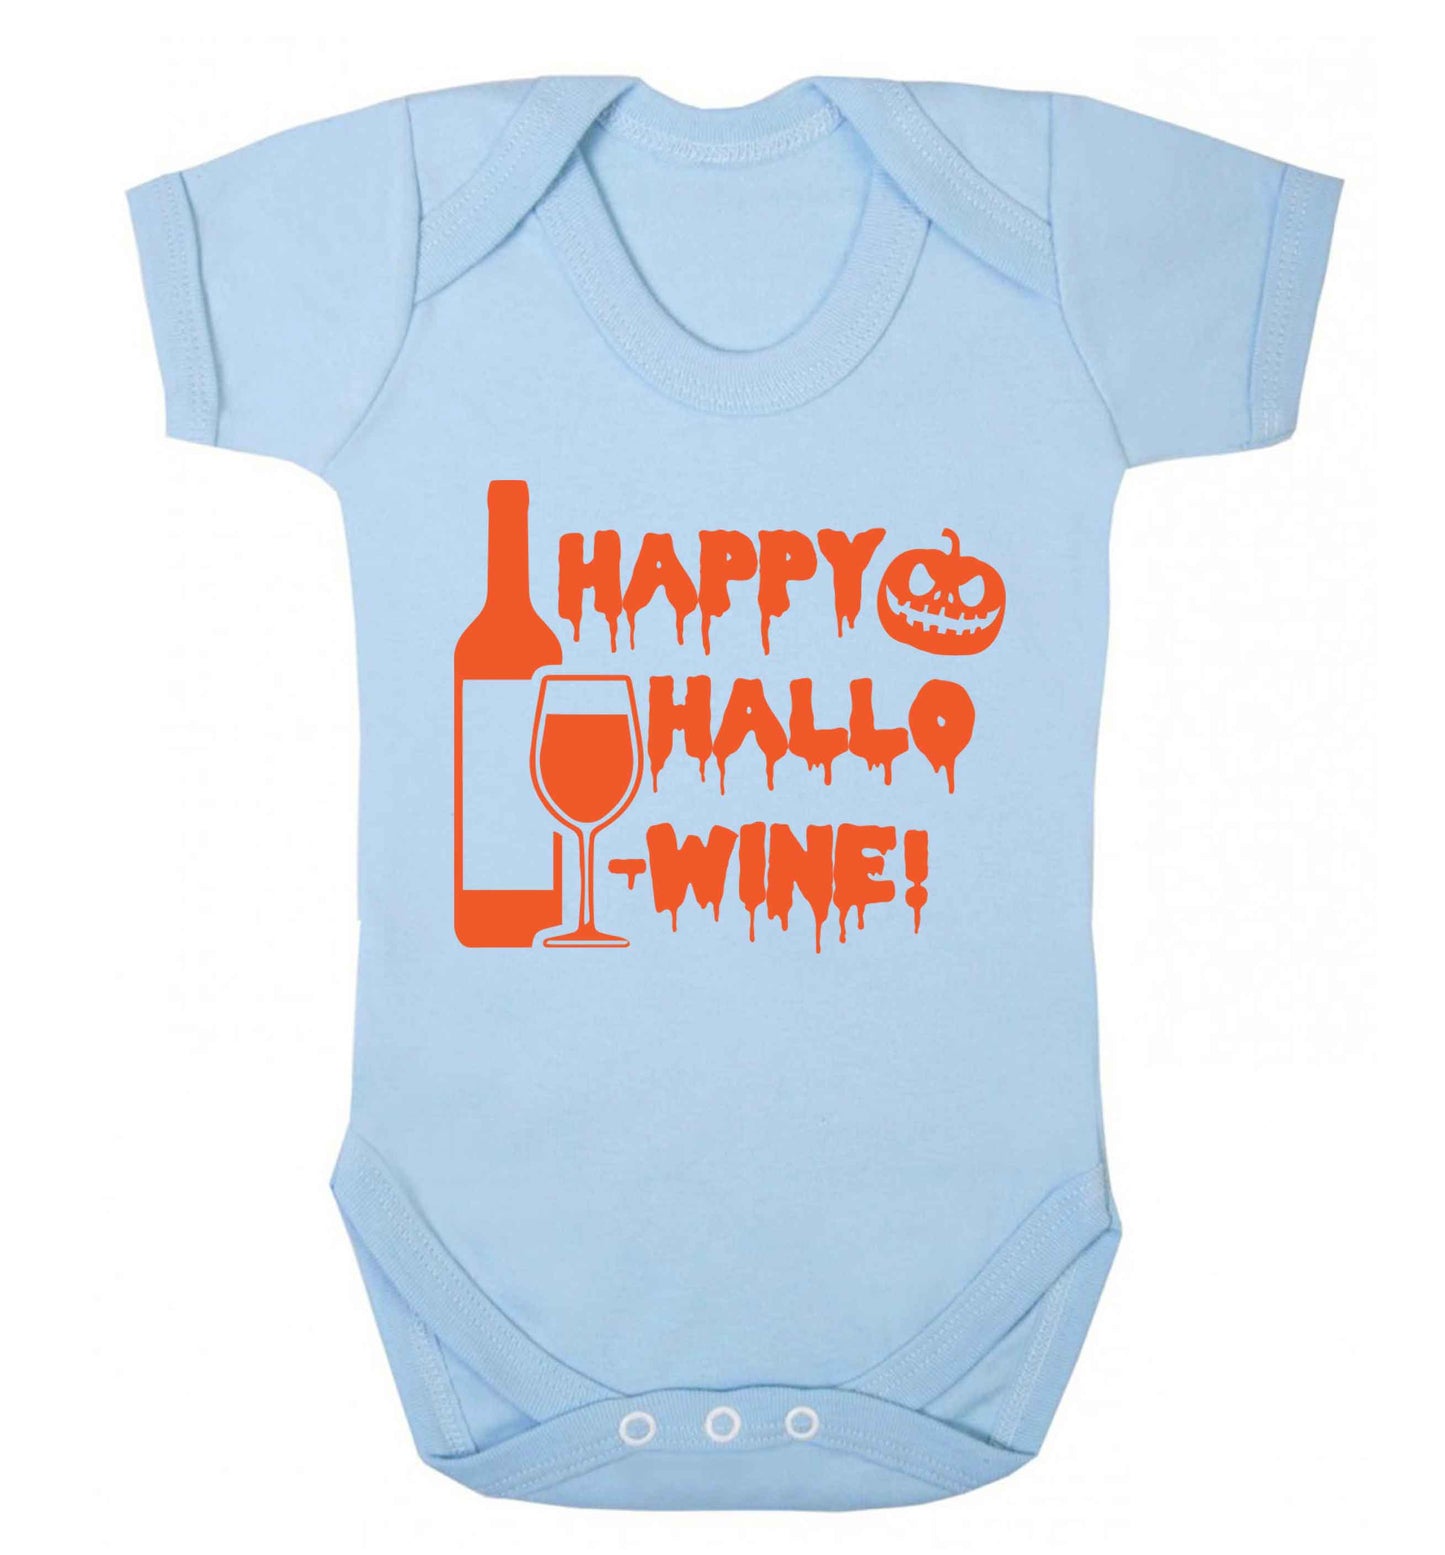 Happy hallow-wine Baby Vest pale blue 18-24 months